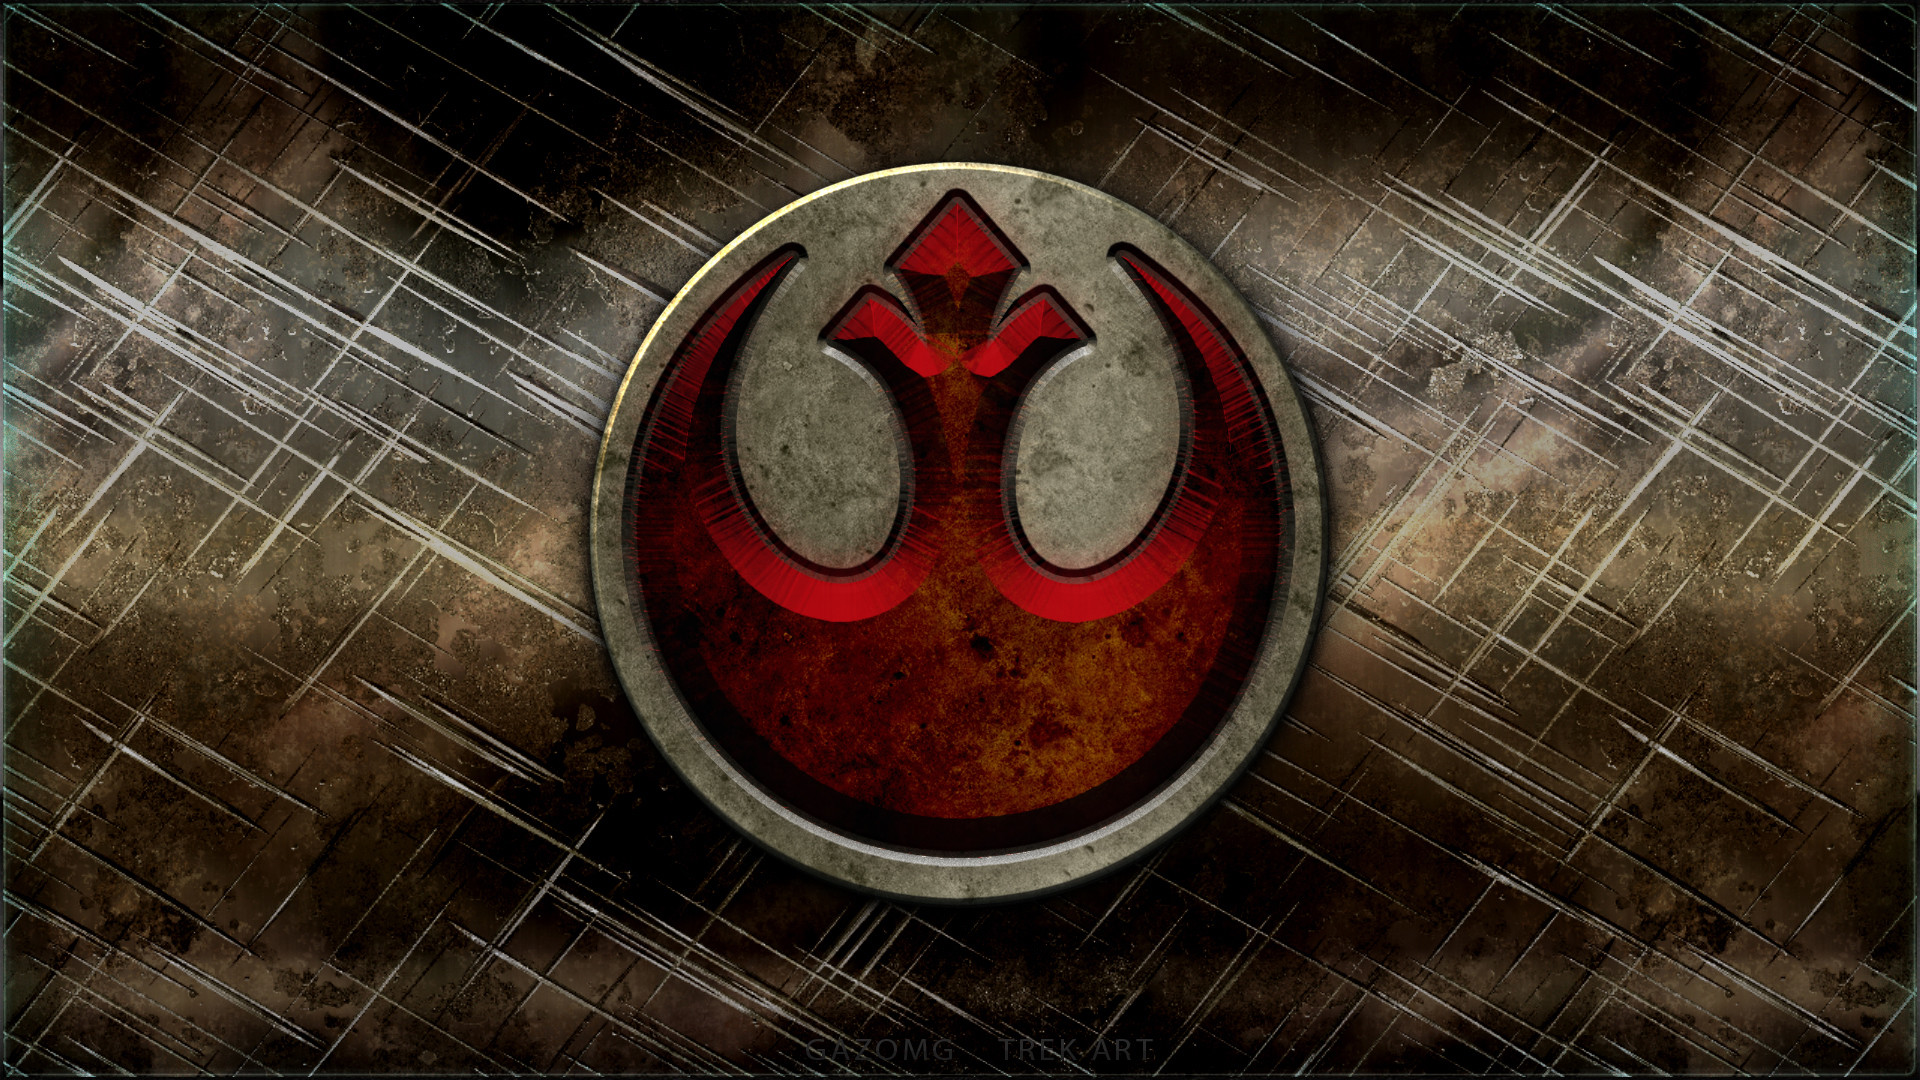 1920x1080 ... Star Wars Rebel Alliance Logo by gazomg